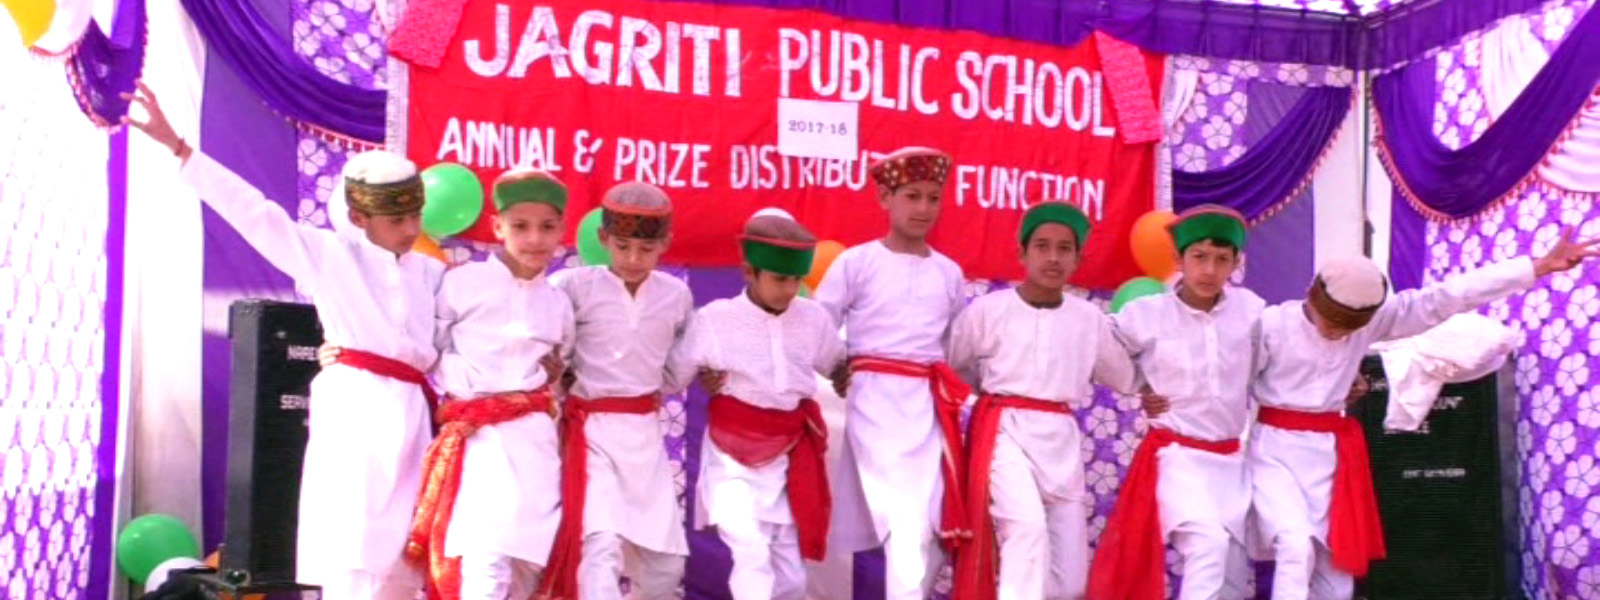 Jagriti Public School